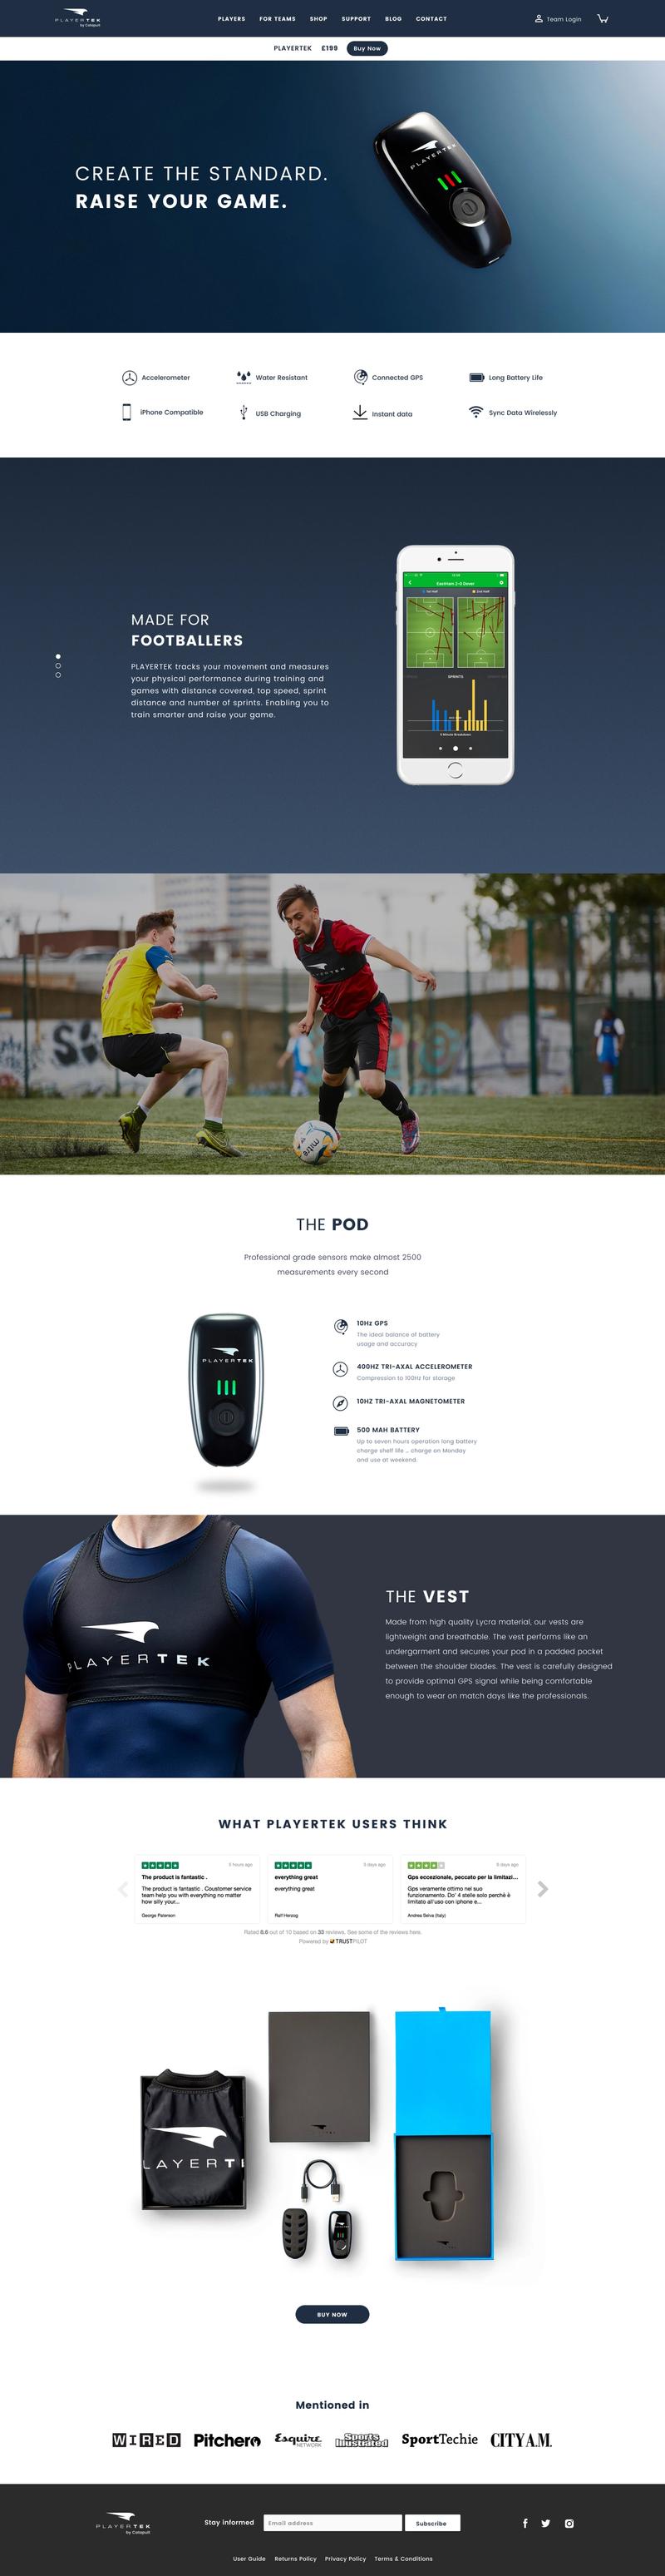 PlayerTek Product Page - Large Screen